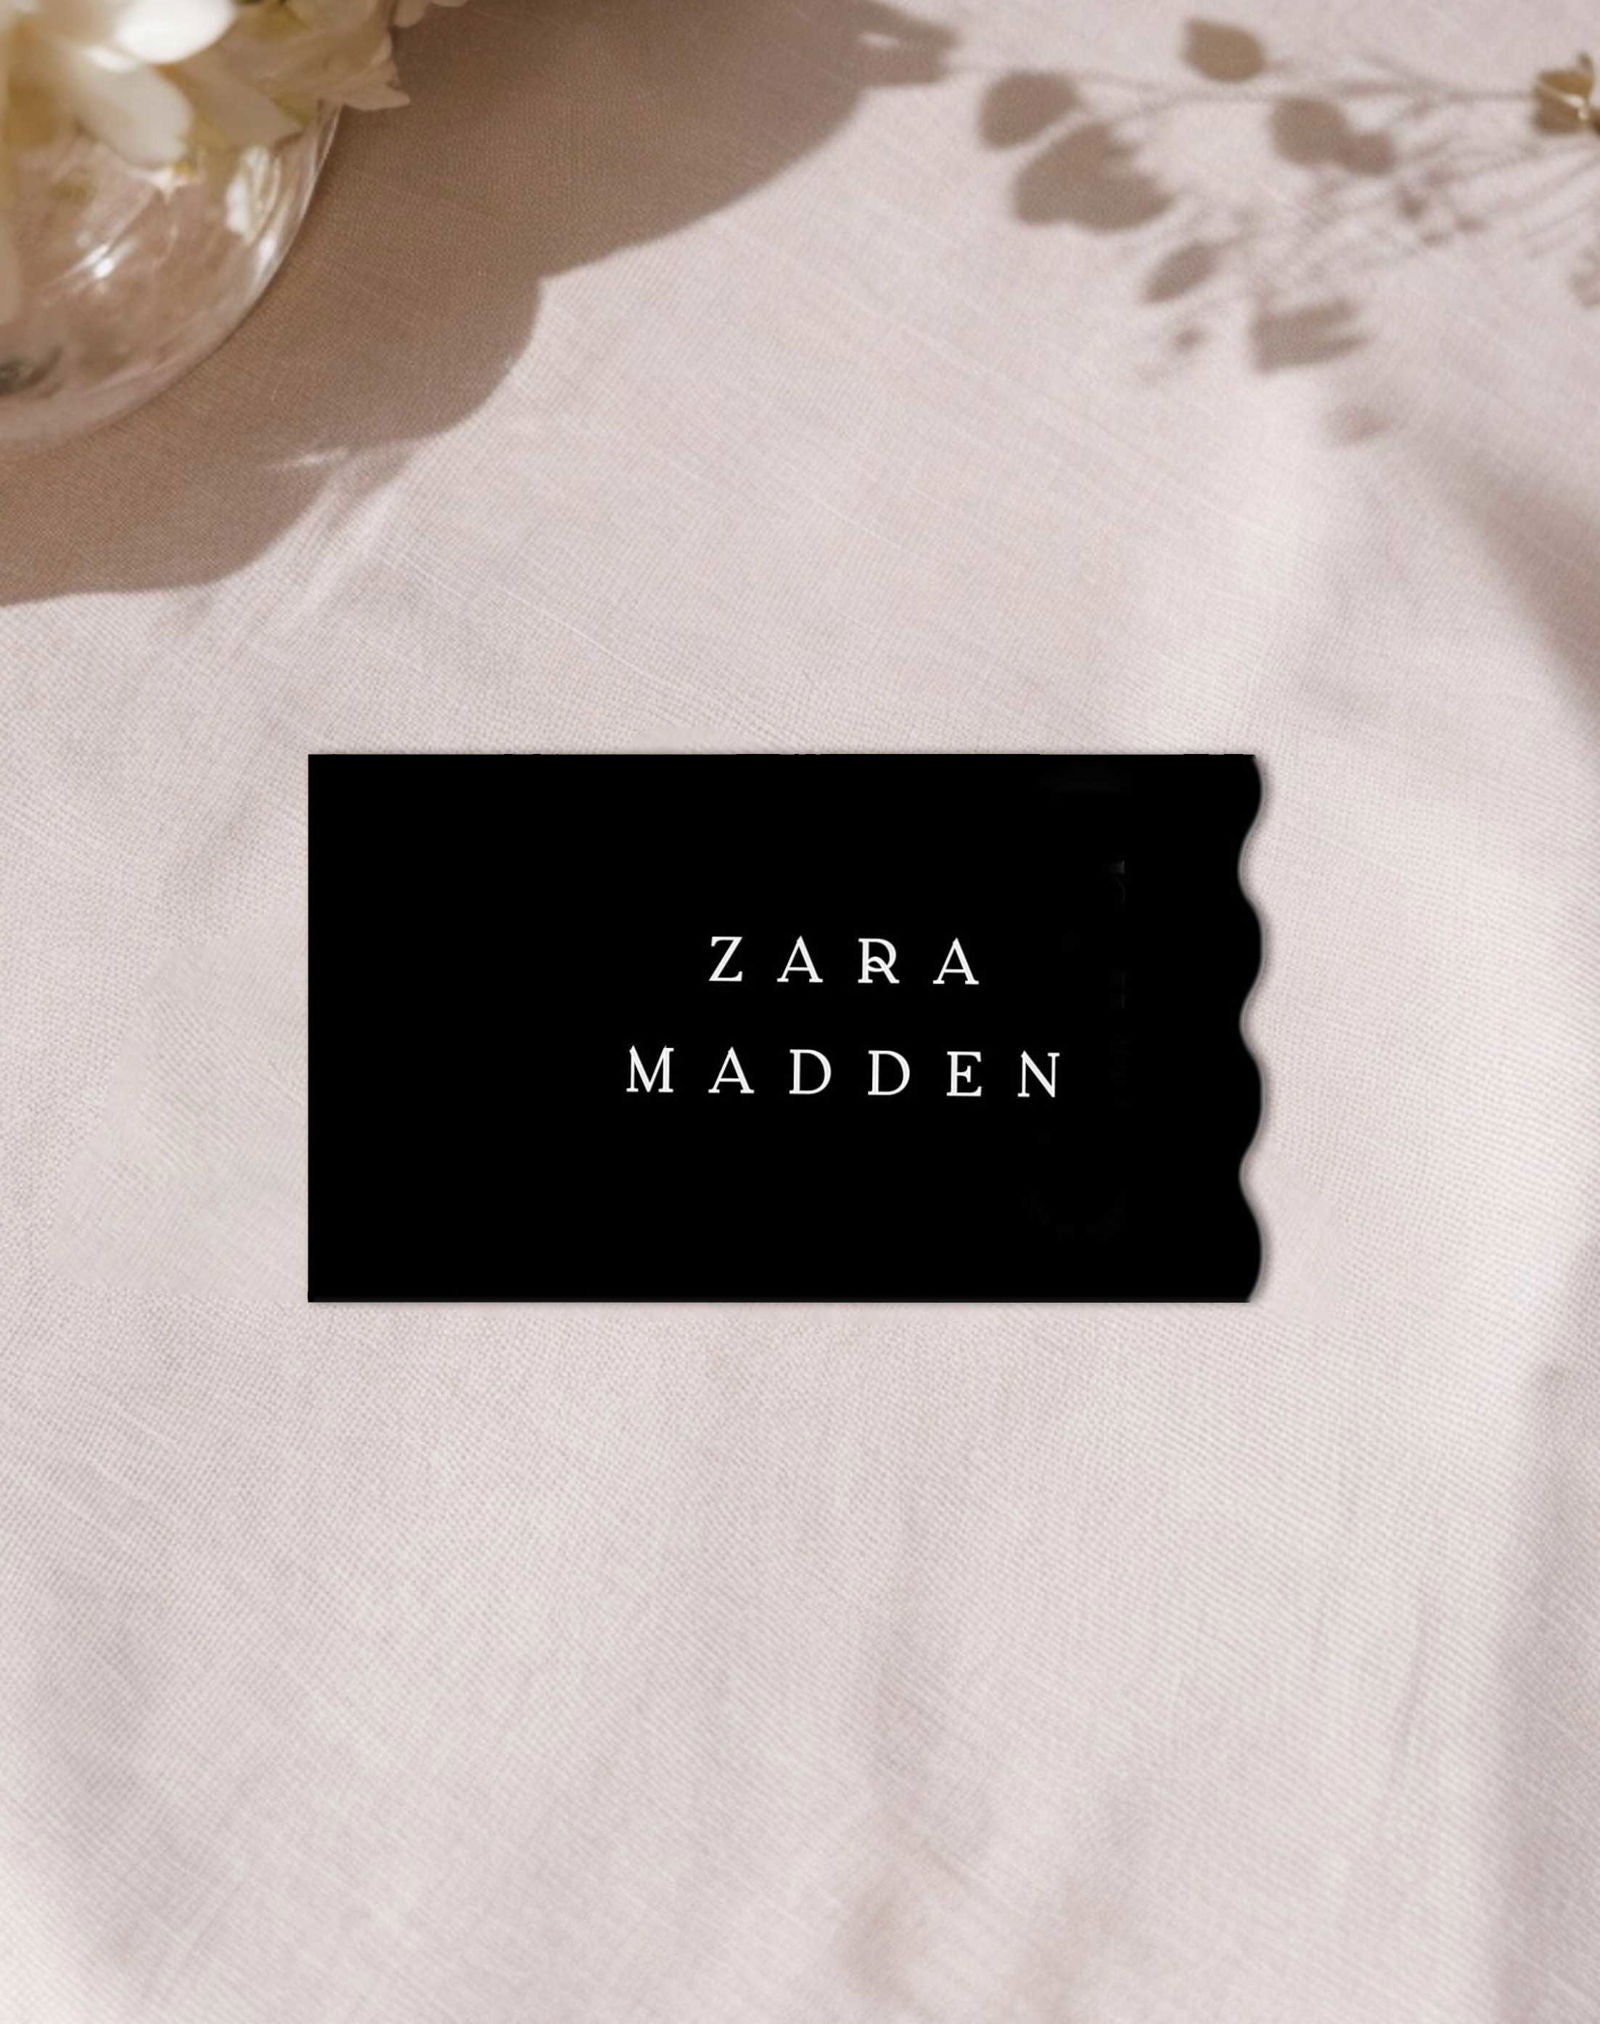 Zara | Minimal Place Card - Ivy and Gold Wedding Stationery -  